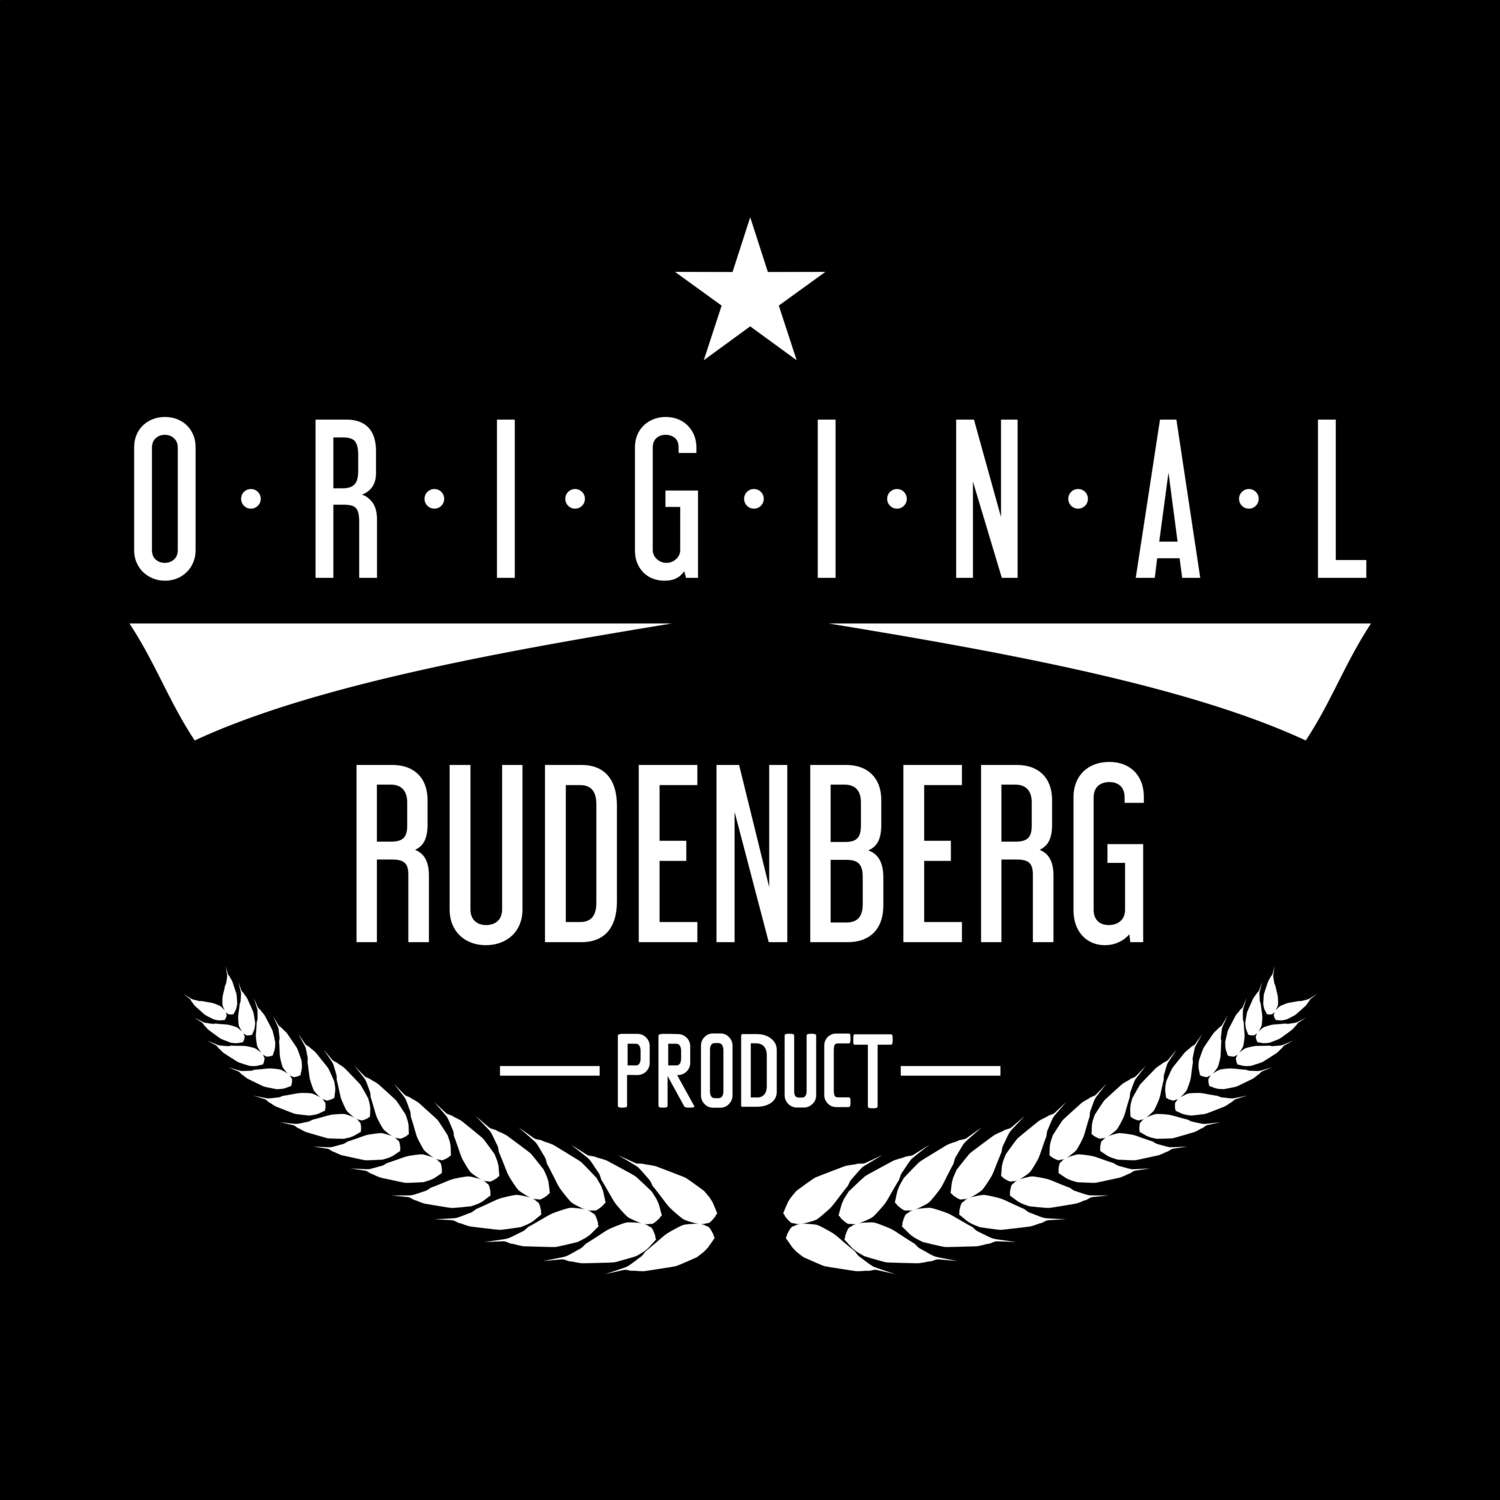 Rudenberg T-Shirt »Original Product«